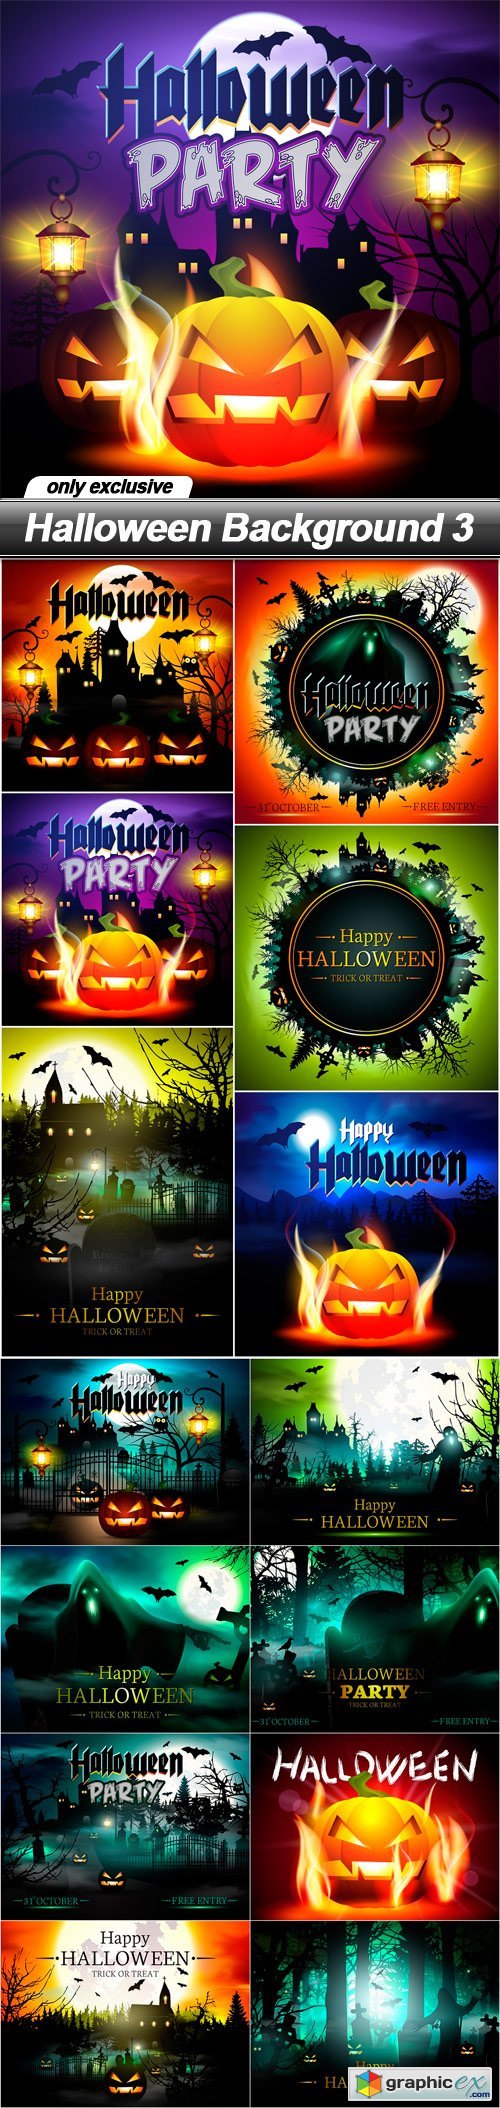 Halloween Background 3 - 14 EPS